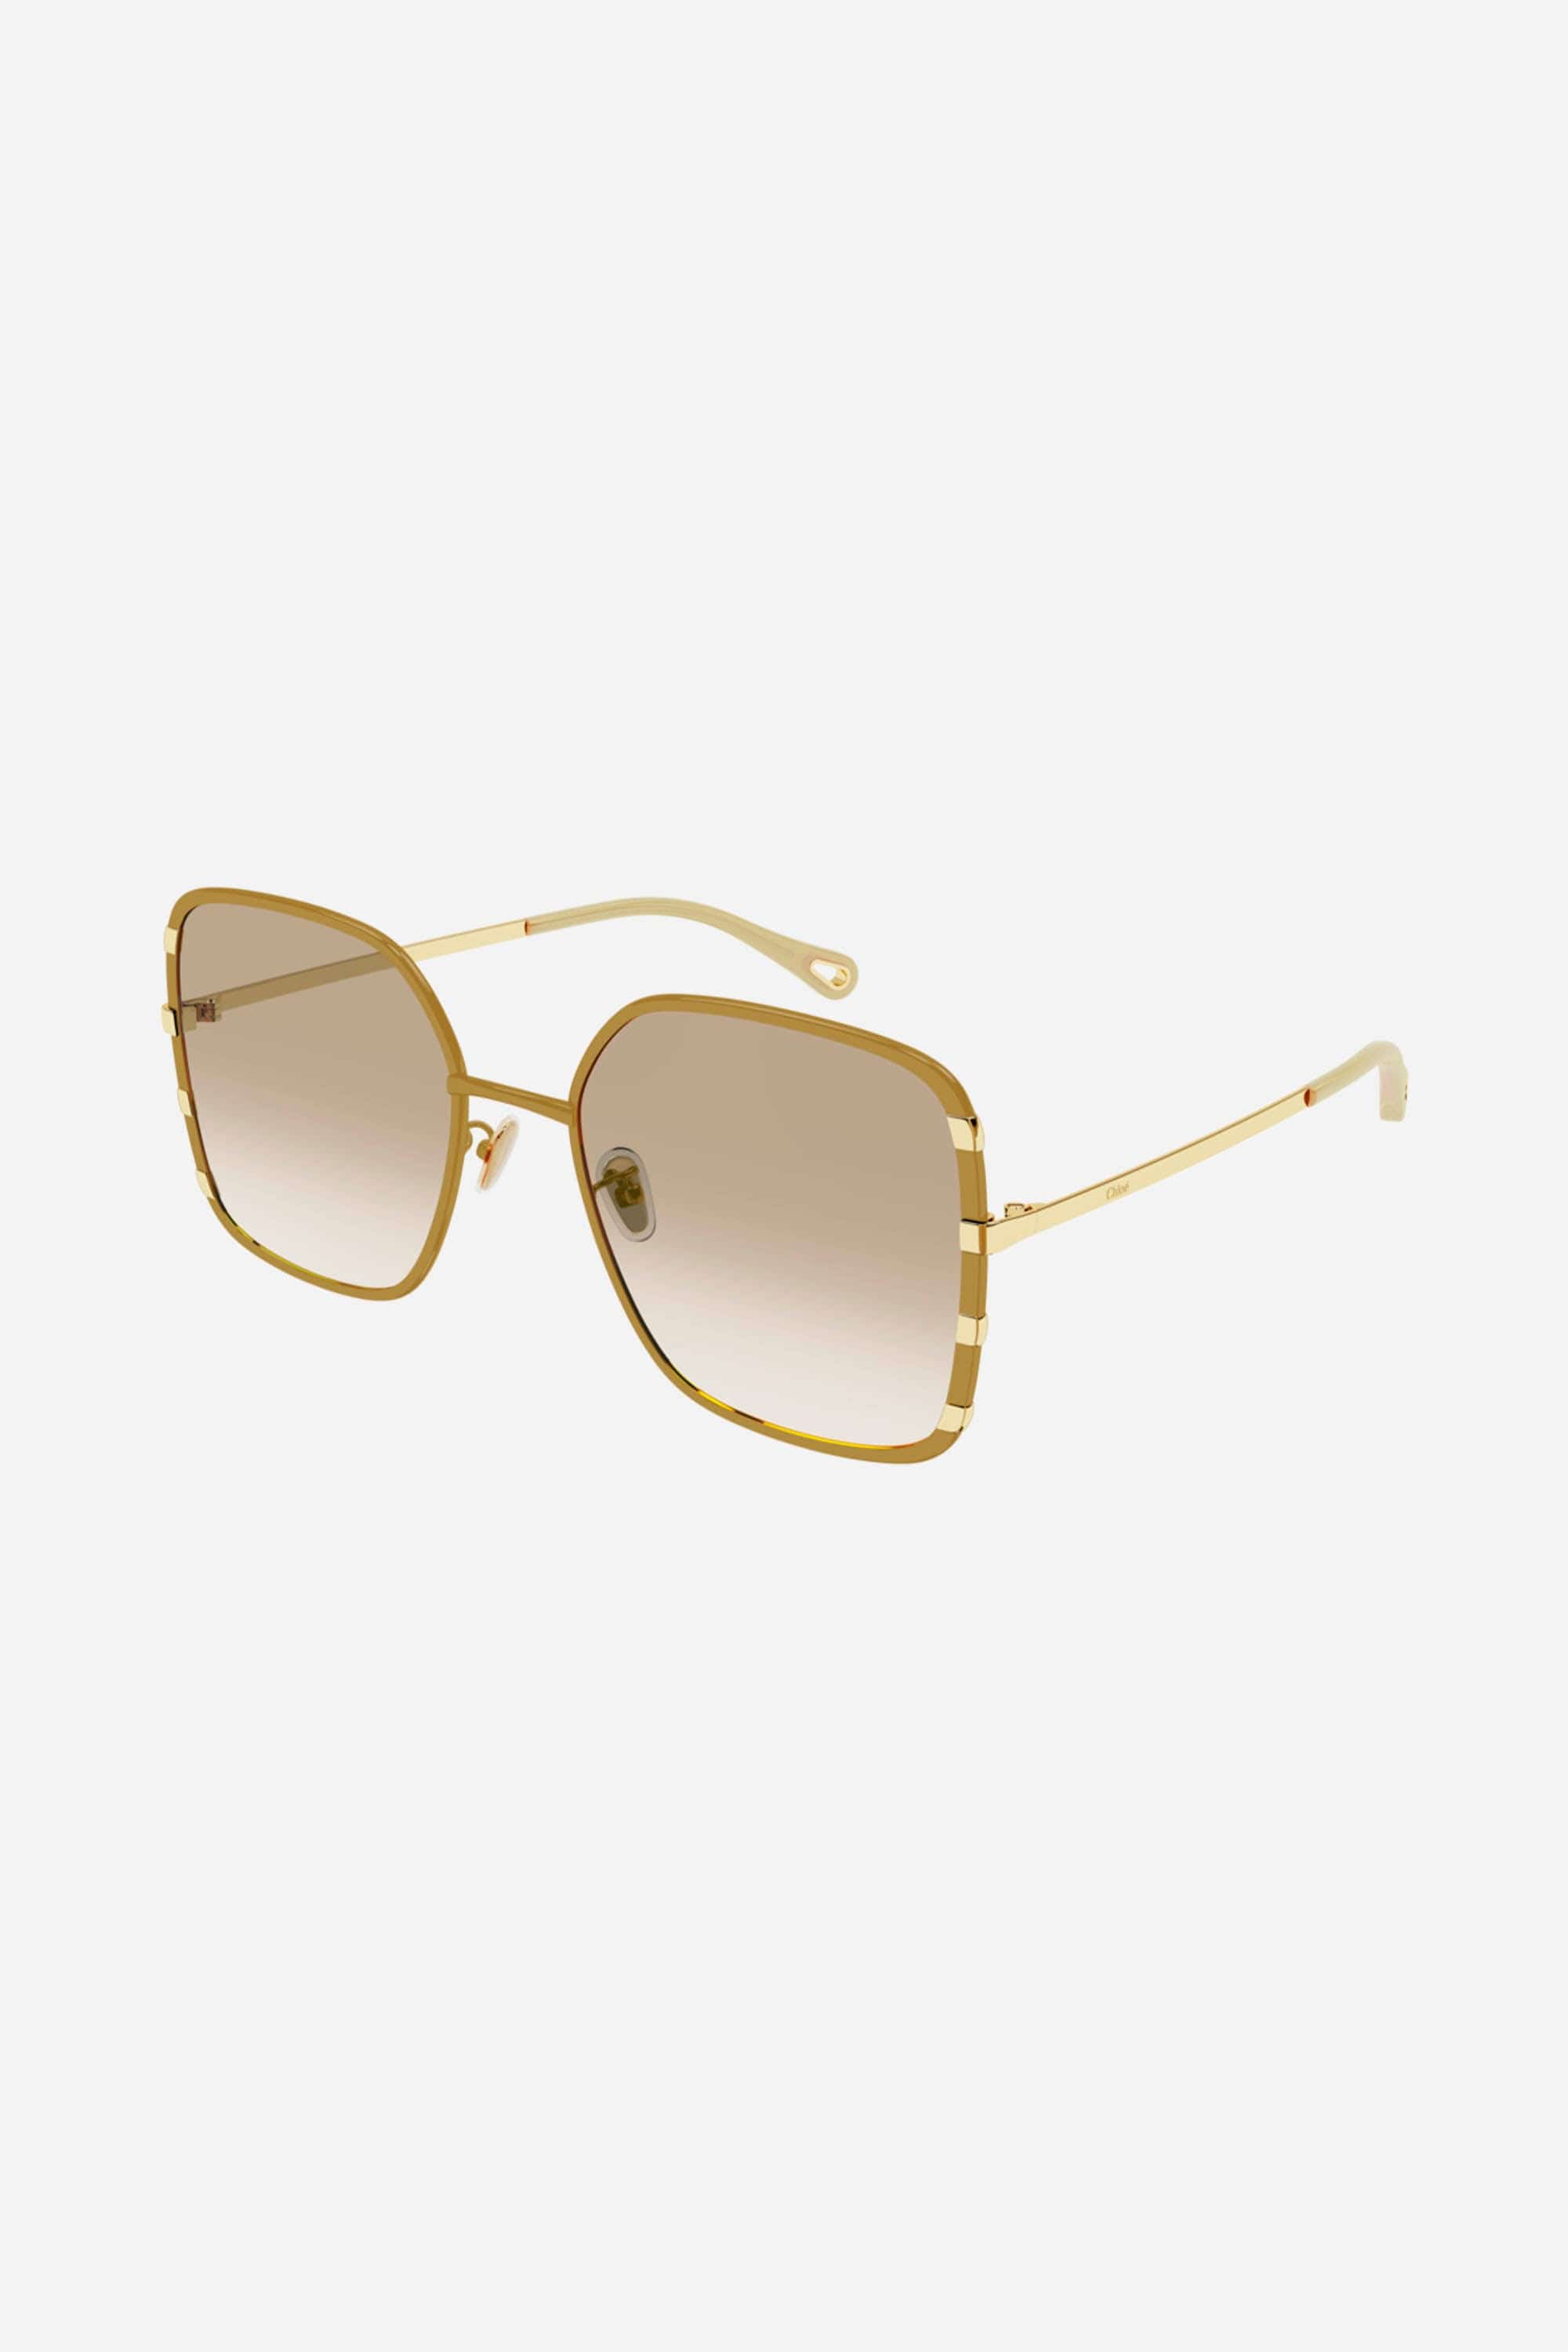 Chloe metal squared matt light brown sunglasses - Eyewear Club